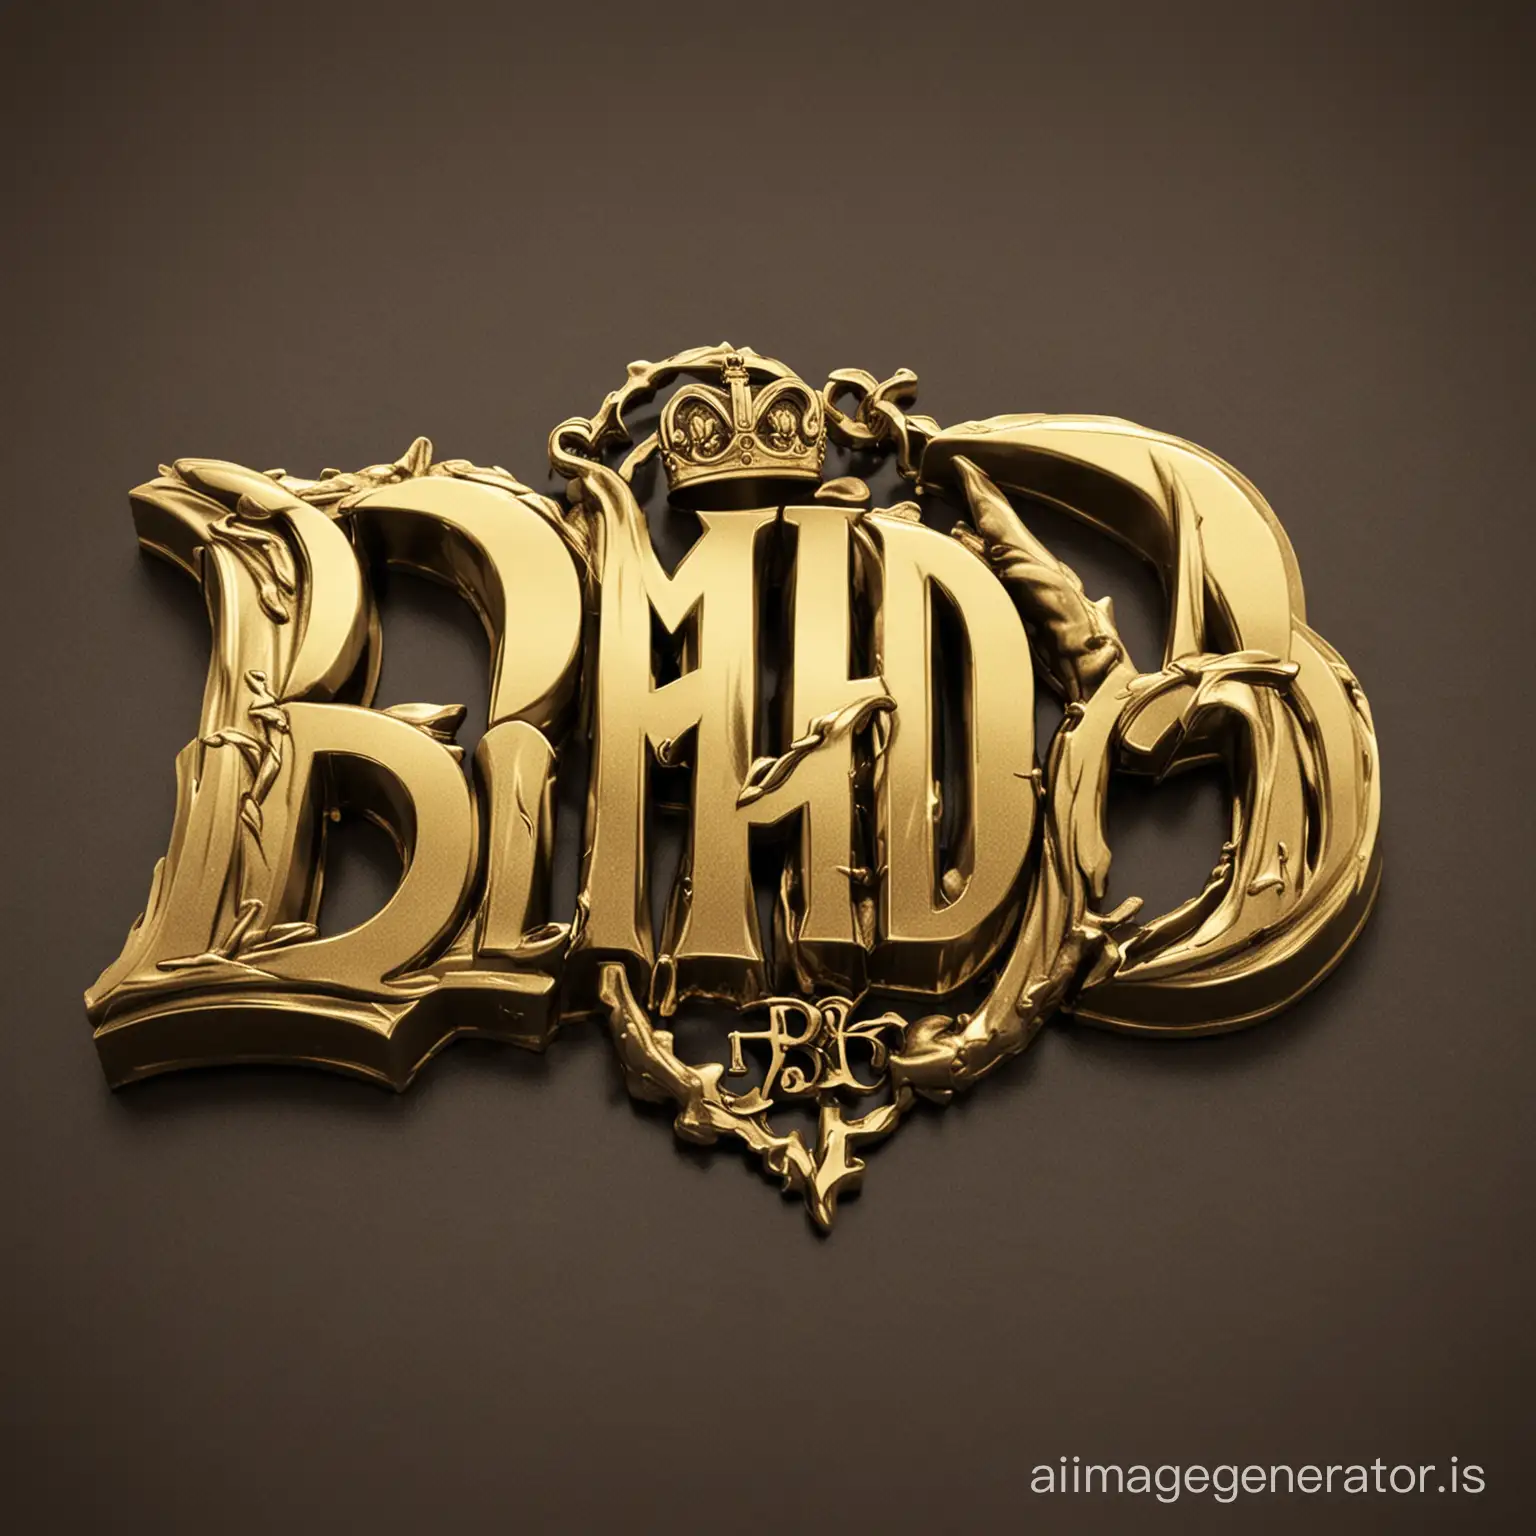 Create branding logo for "B. Murda" Make the logo a gold metallic 3-D image combination of gang life